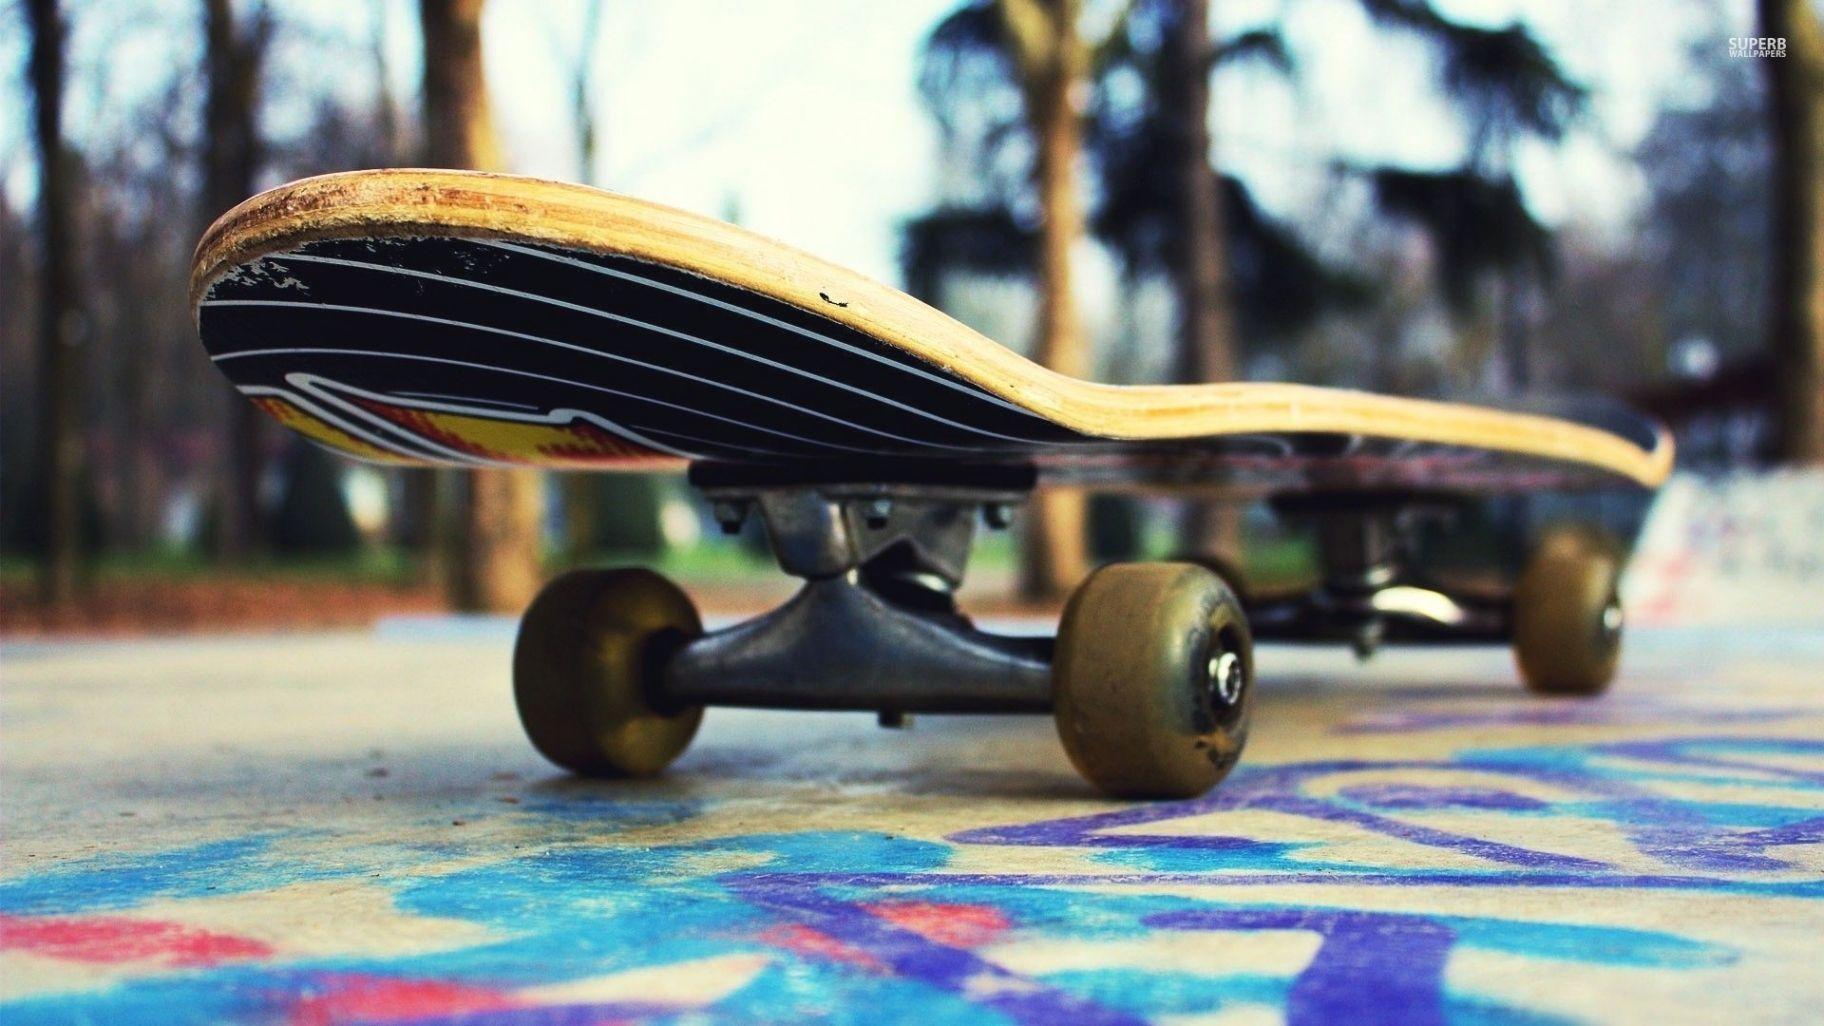 Skateboard Wallpaper Group within Best iPhone Wallpaper